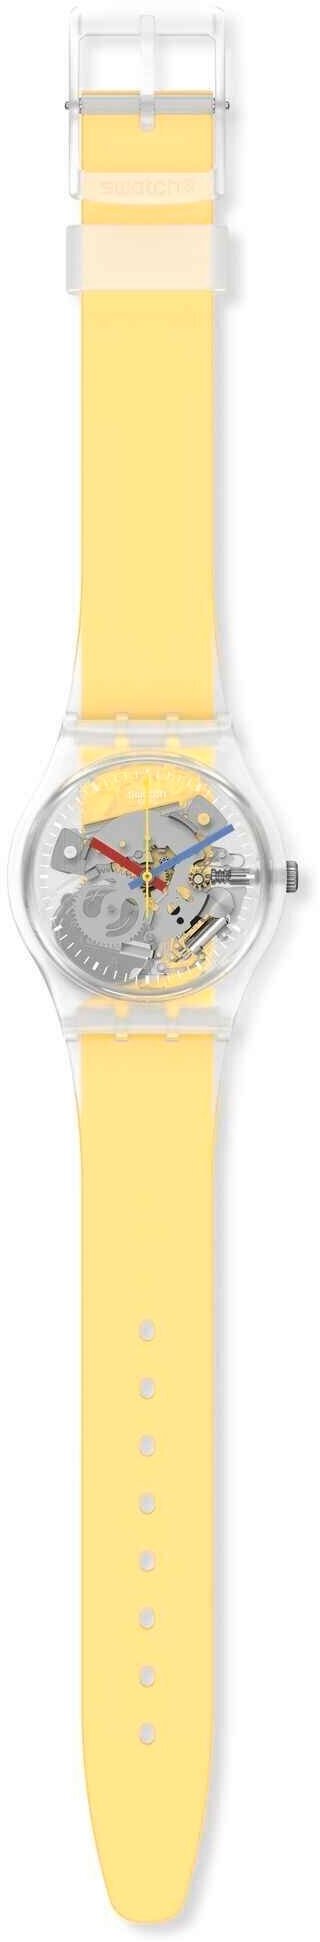 Наручные часы swatch Наручные часы SWATCH CLEARLY YELLOW STRIPED GE291, желтый